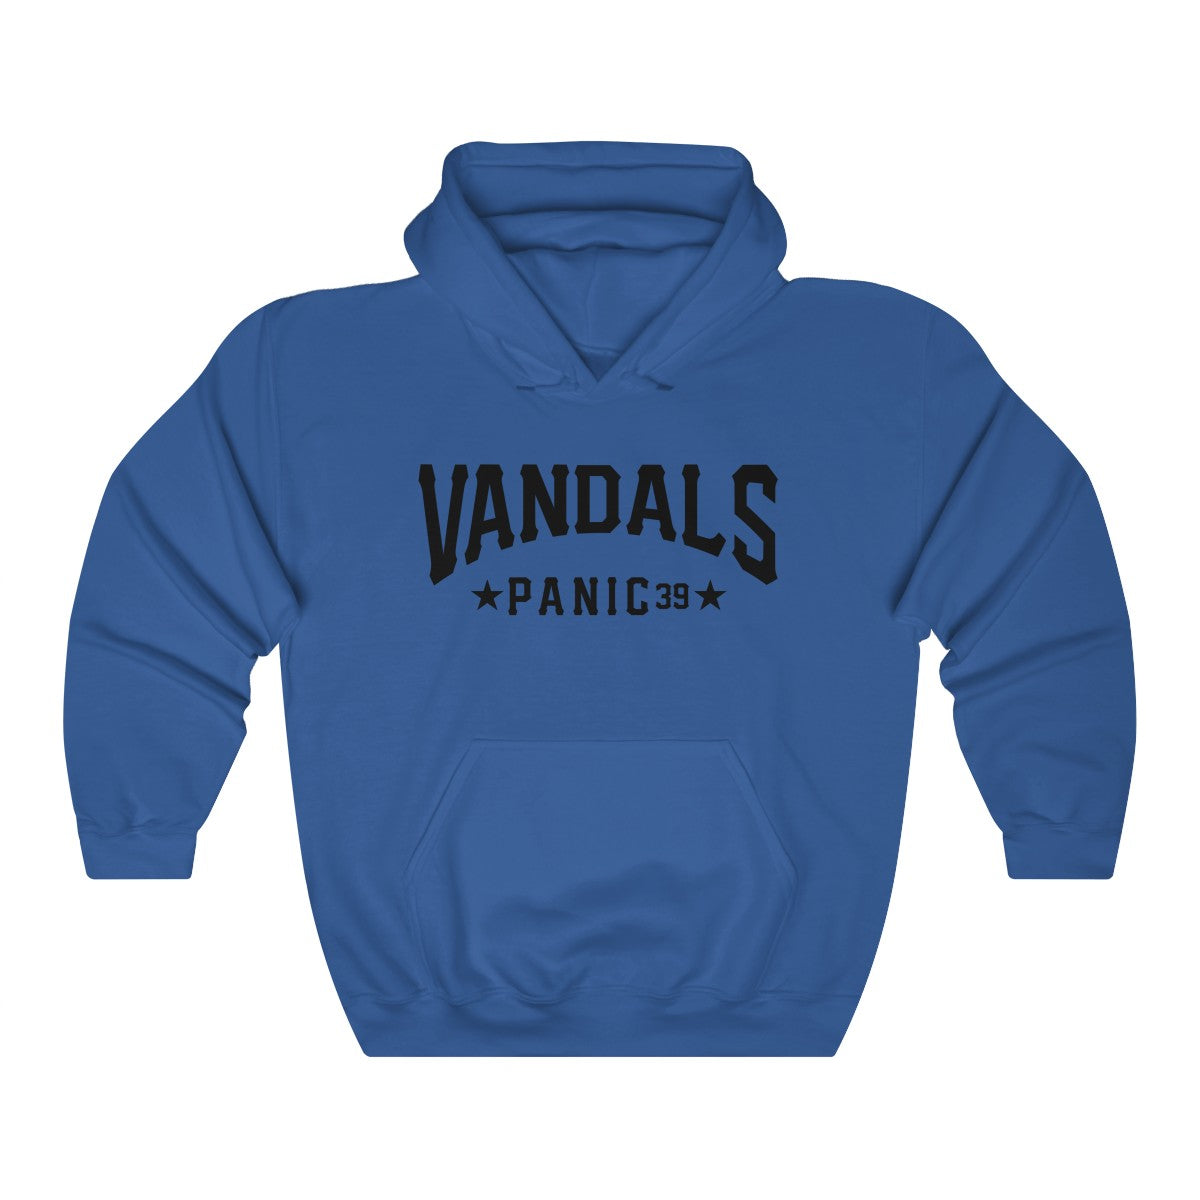 Panic 39 Vandals Classic Hoodie Sweatshirt - Black Print - concreteaddicts